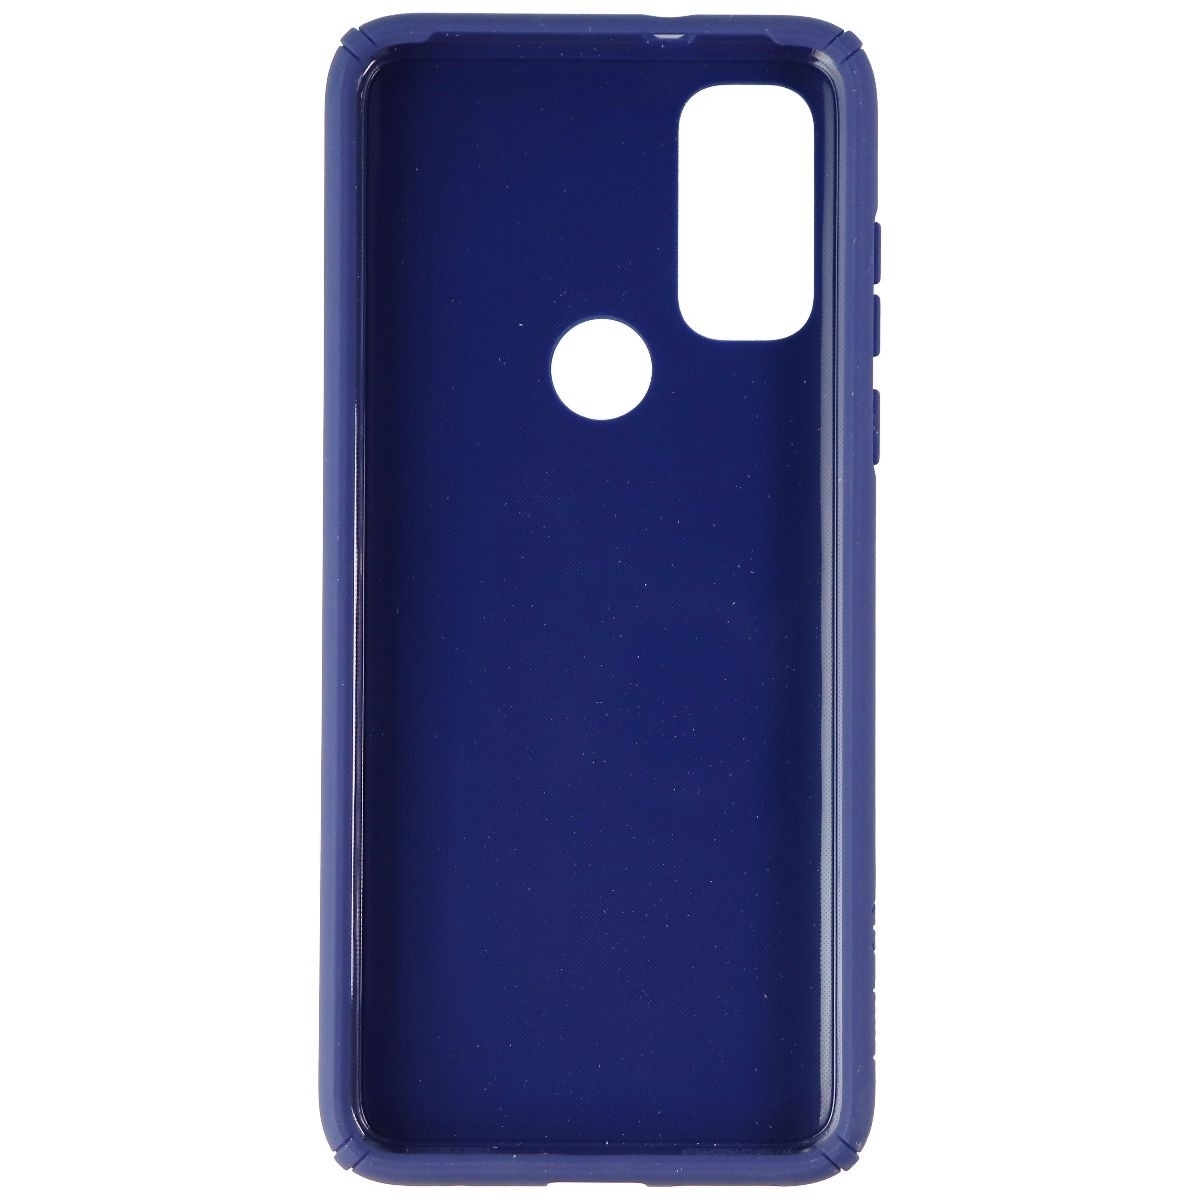 Speck Presidio Exotech Series Flexible Case For Moto G Pure Smartphone - Blue